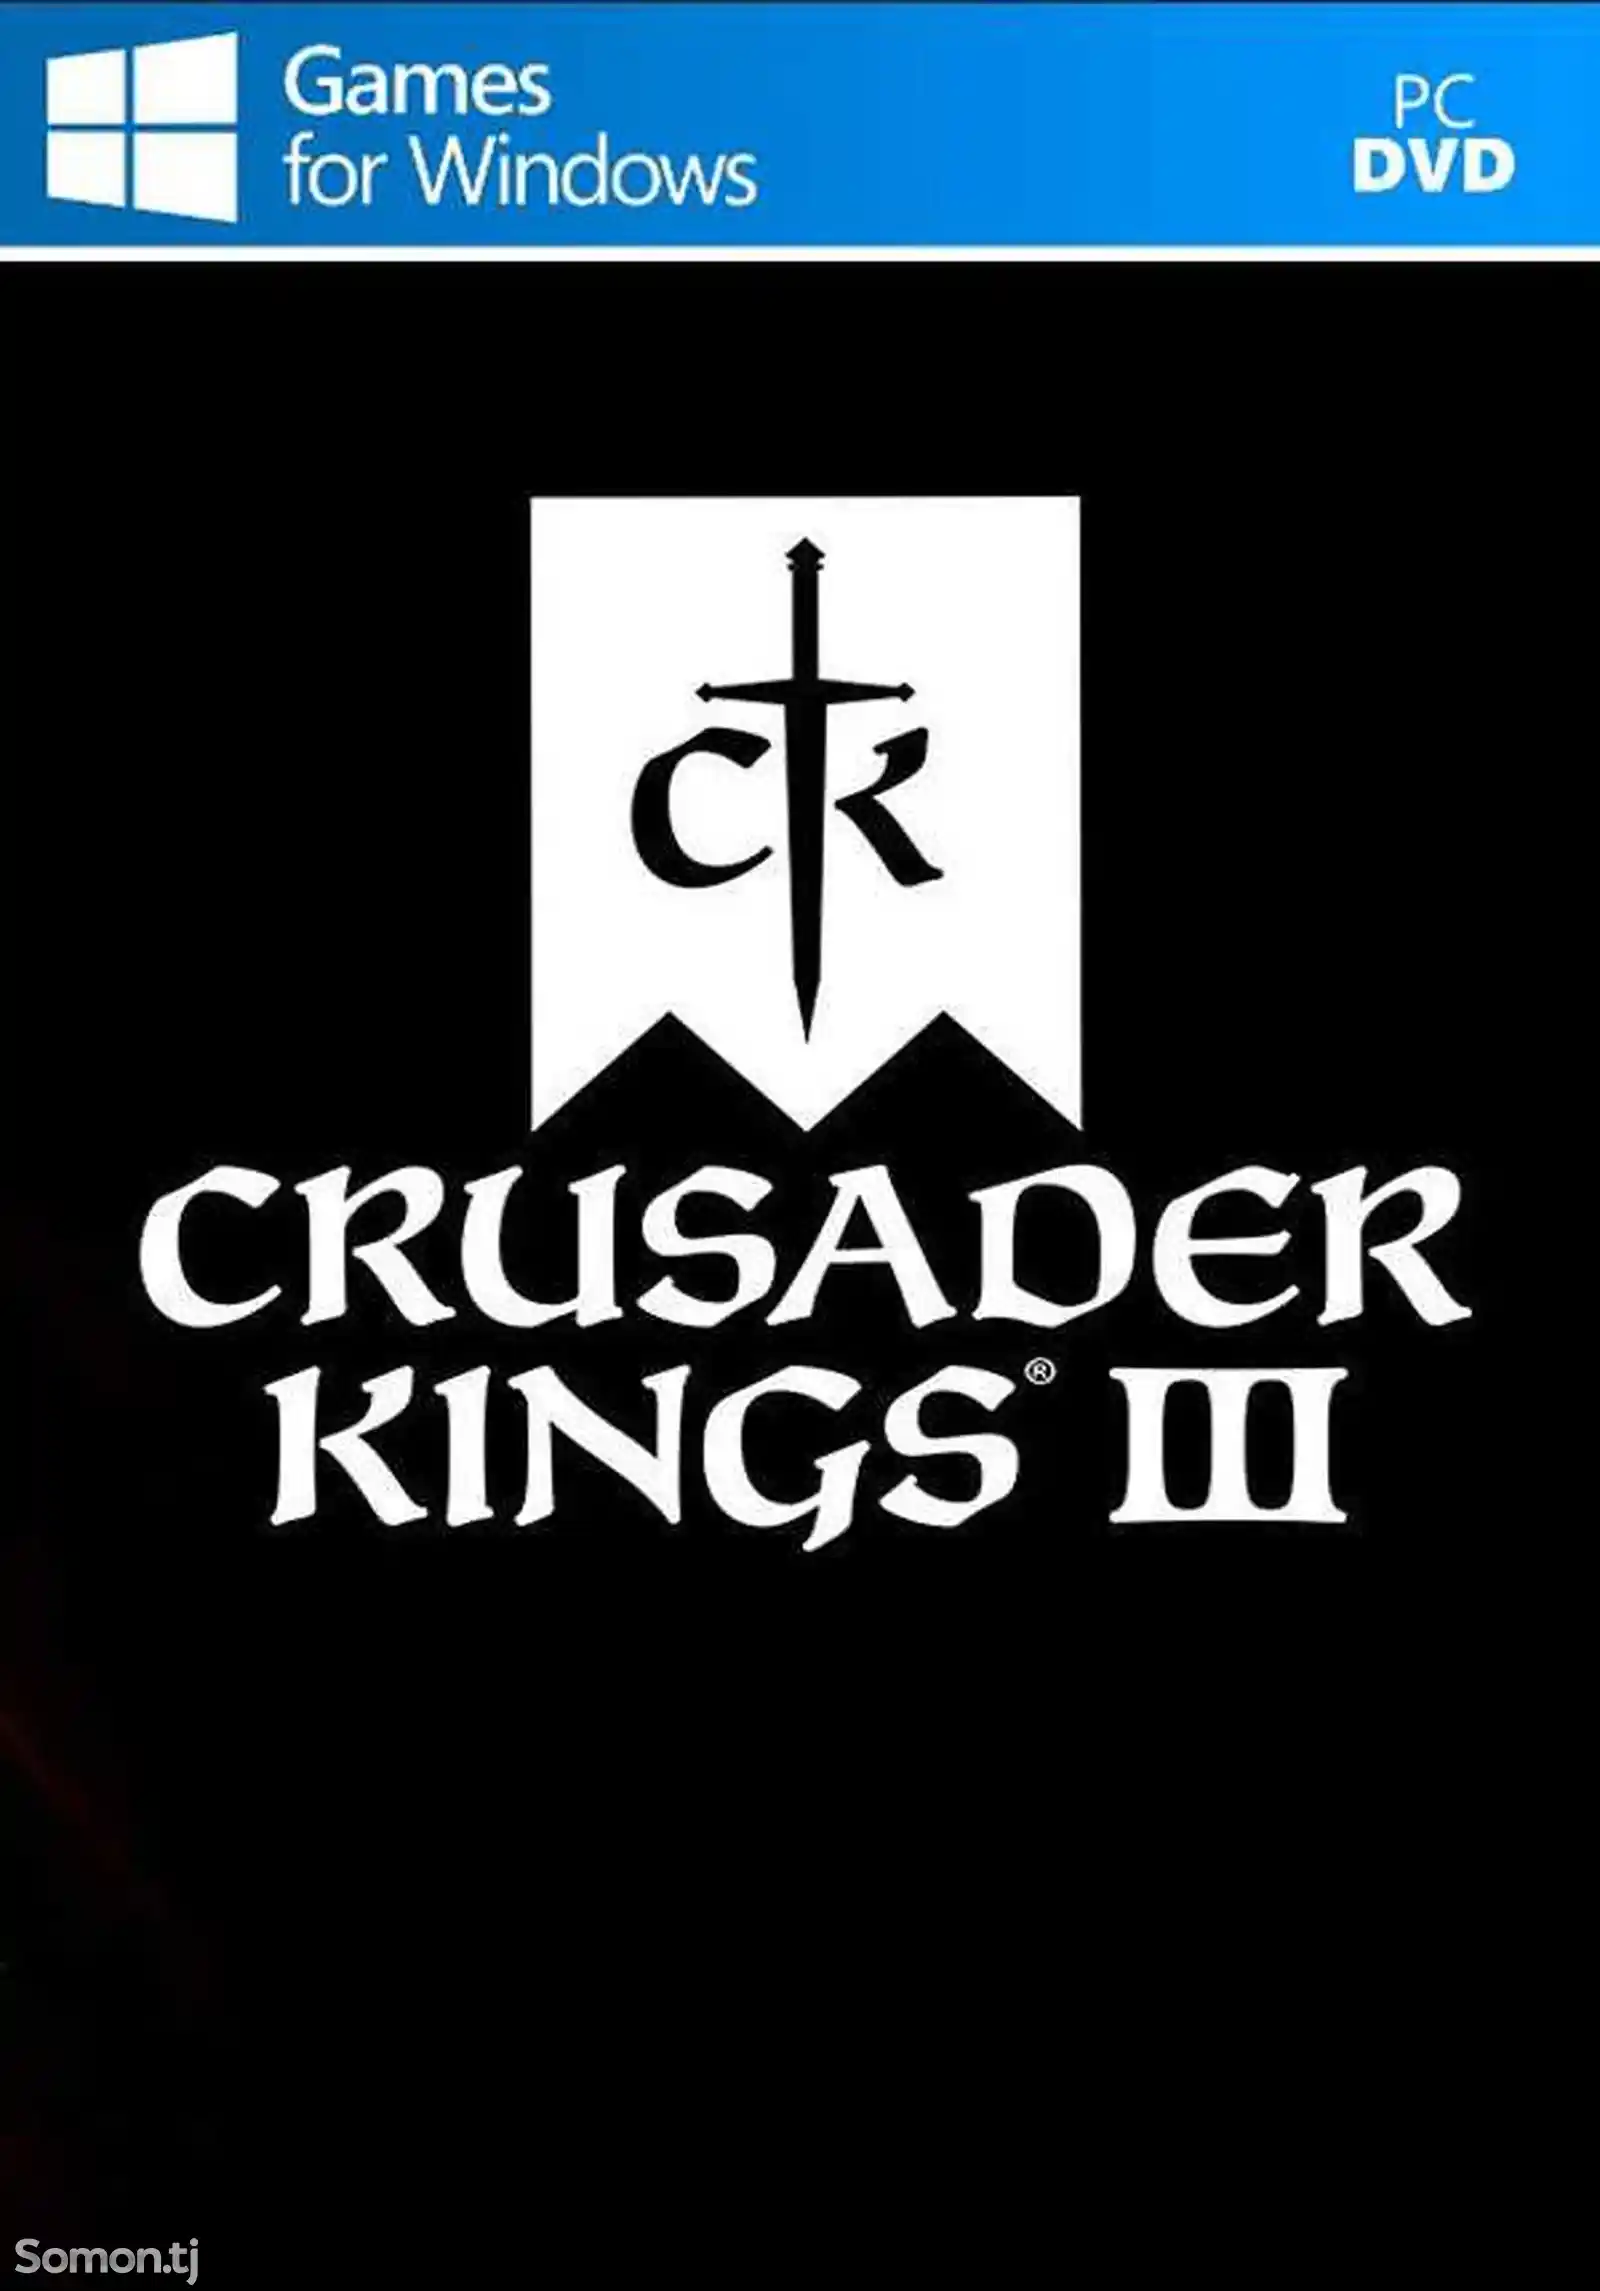 Игра Crusader kings 3 для компьютера-пк-pc-1